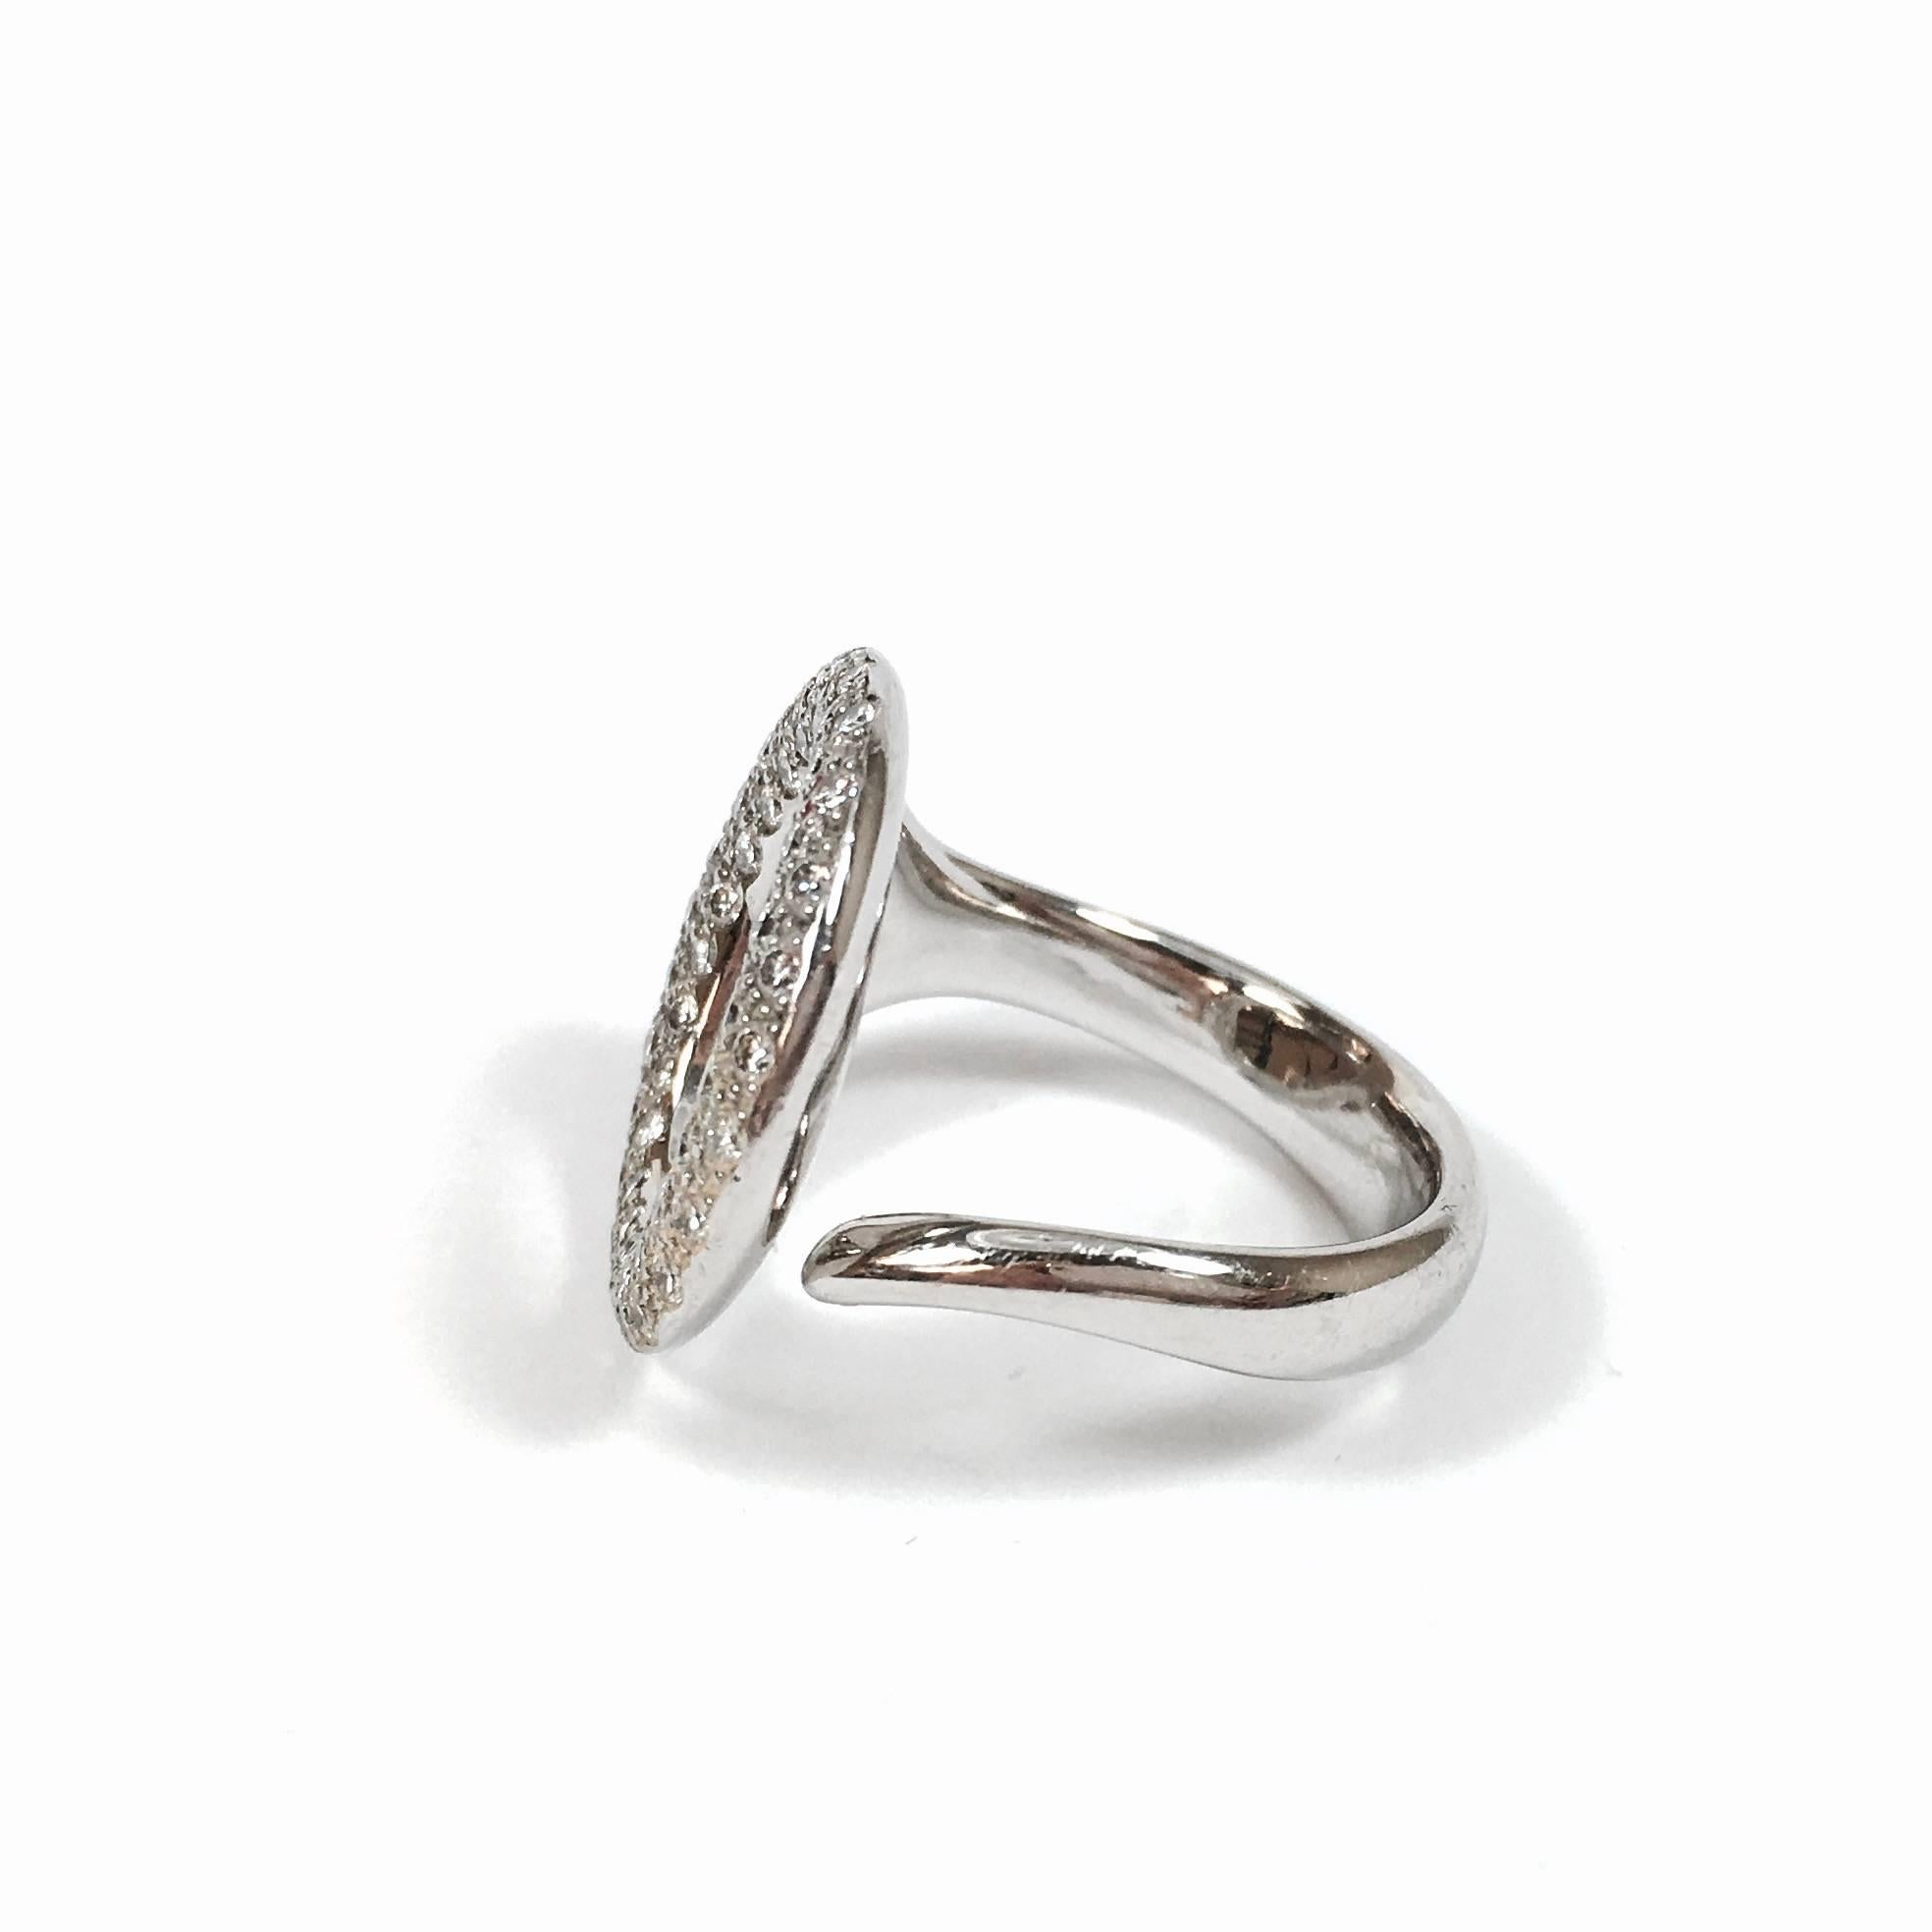 Platinum Elsa Peretti Diamond Sevillana Ring by Tiffany & Co. 
Total Diamond Weight: 0.80ct. 
Weight: 13.0 grams
Size: 6.5
Stamped Hallmarks: Elsa Peretti Spain Tiffany & Co PT950
Tiffany & Co. Current Retail Price: $8,200 (plus tax)